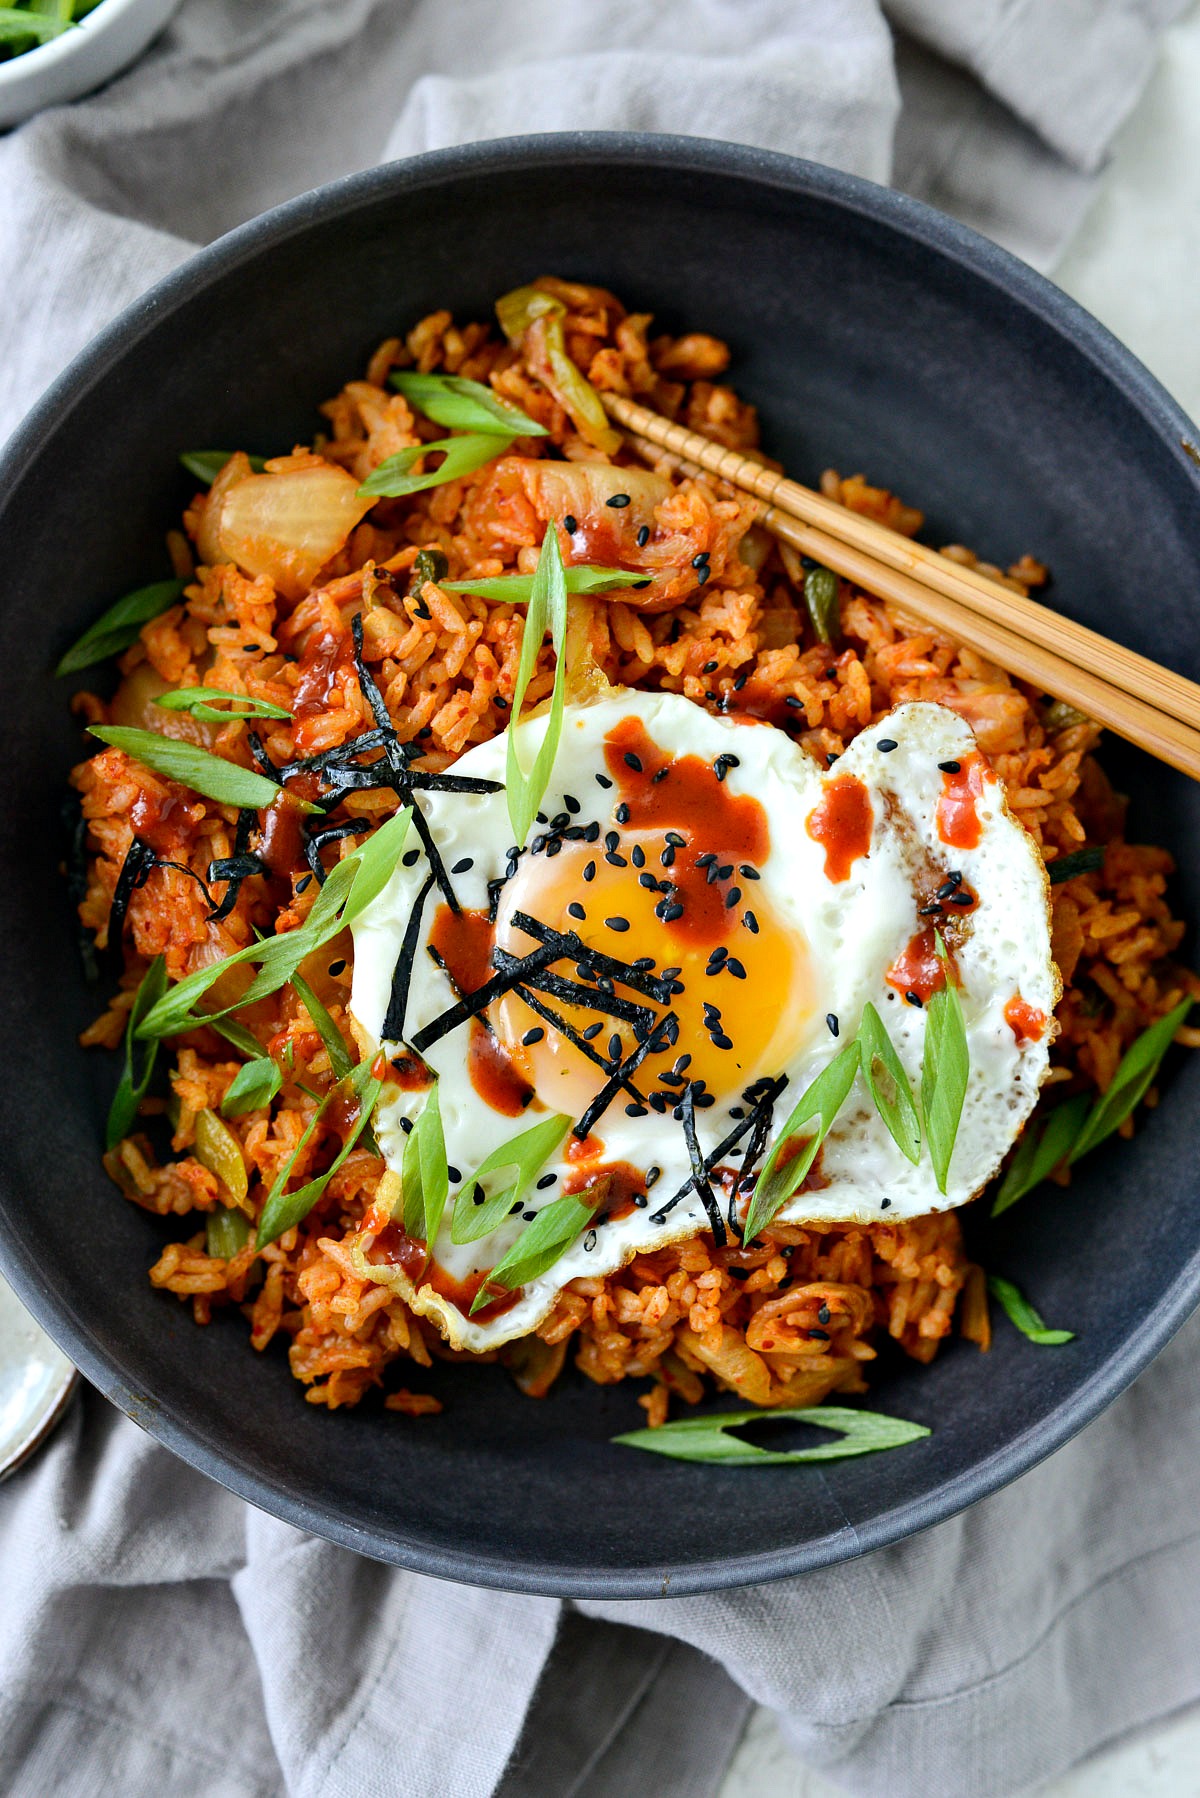 https://www.simplyscratch.com/wp-content/uploads/2020/08/Kimchi-Fried-Rice-Recipe-l-SimplyScratch.com-kimchi-friedrice-recipe-easy-stirfry-korean-gochujang-17.jpg